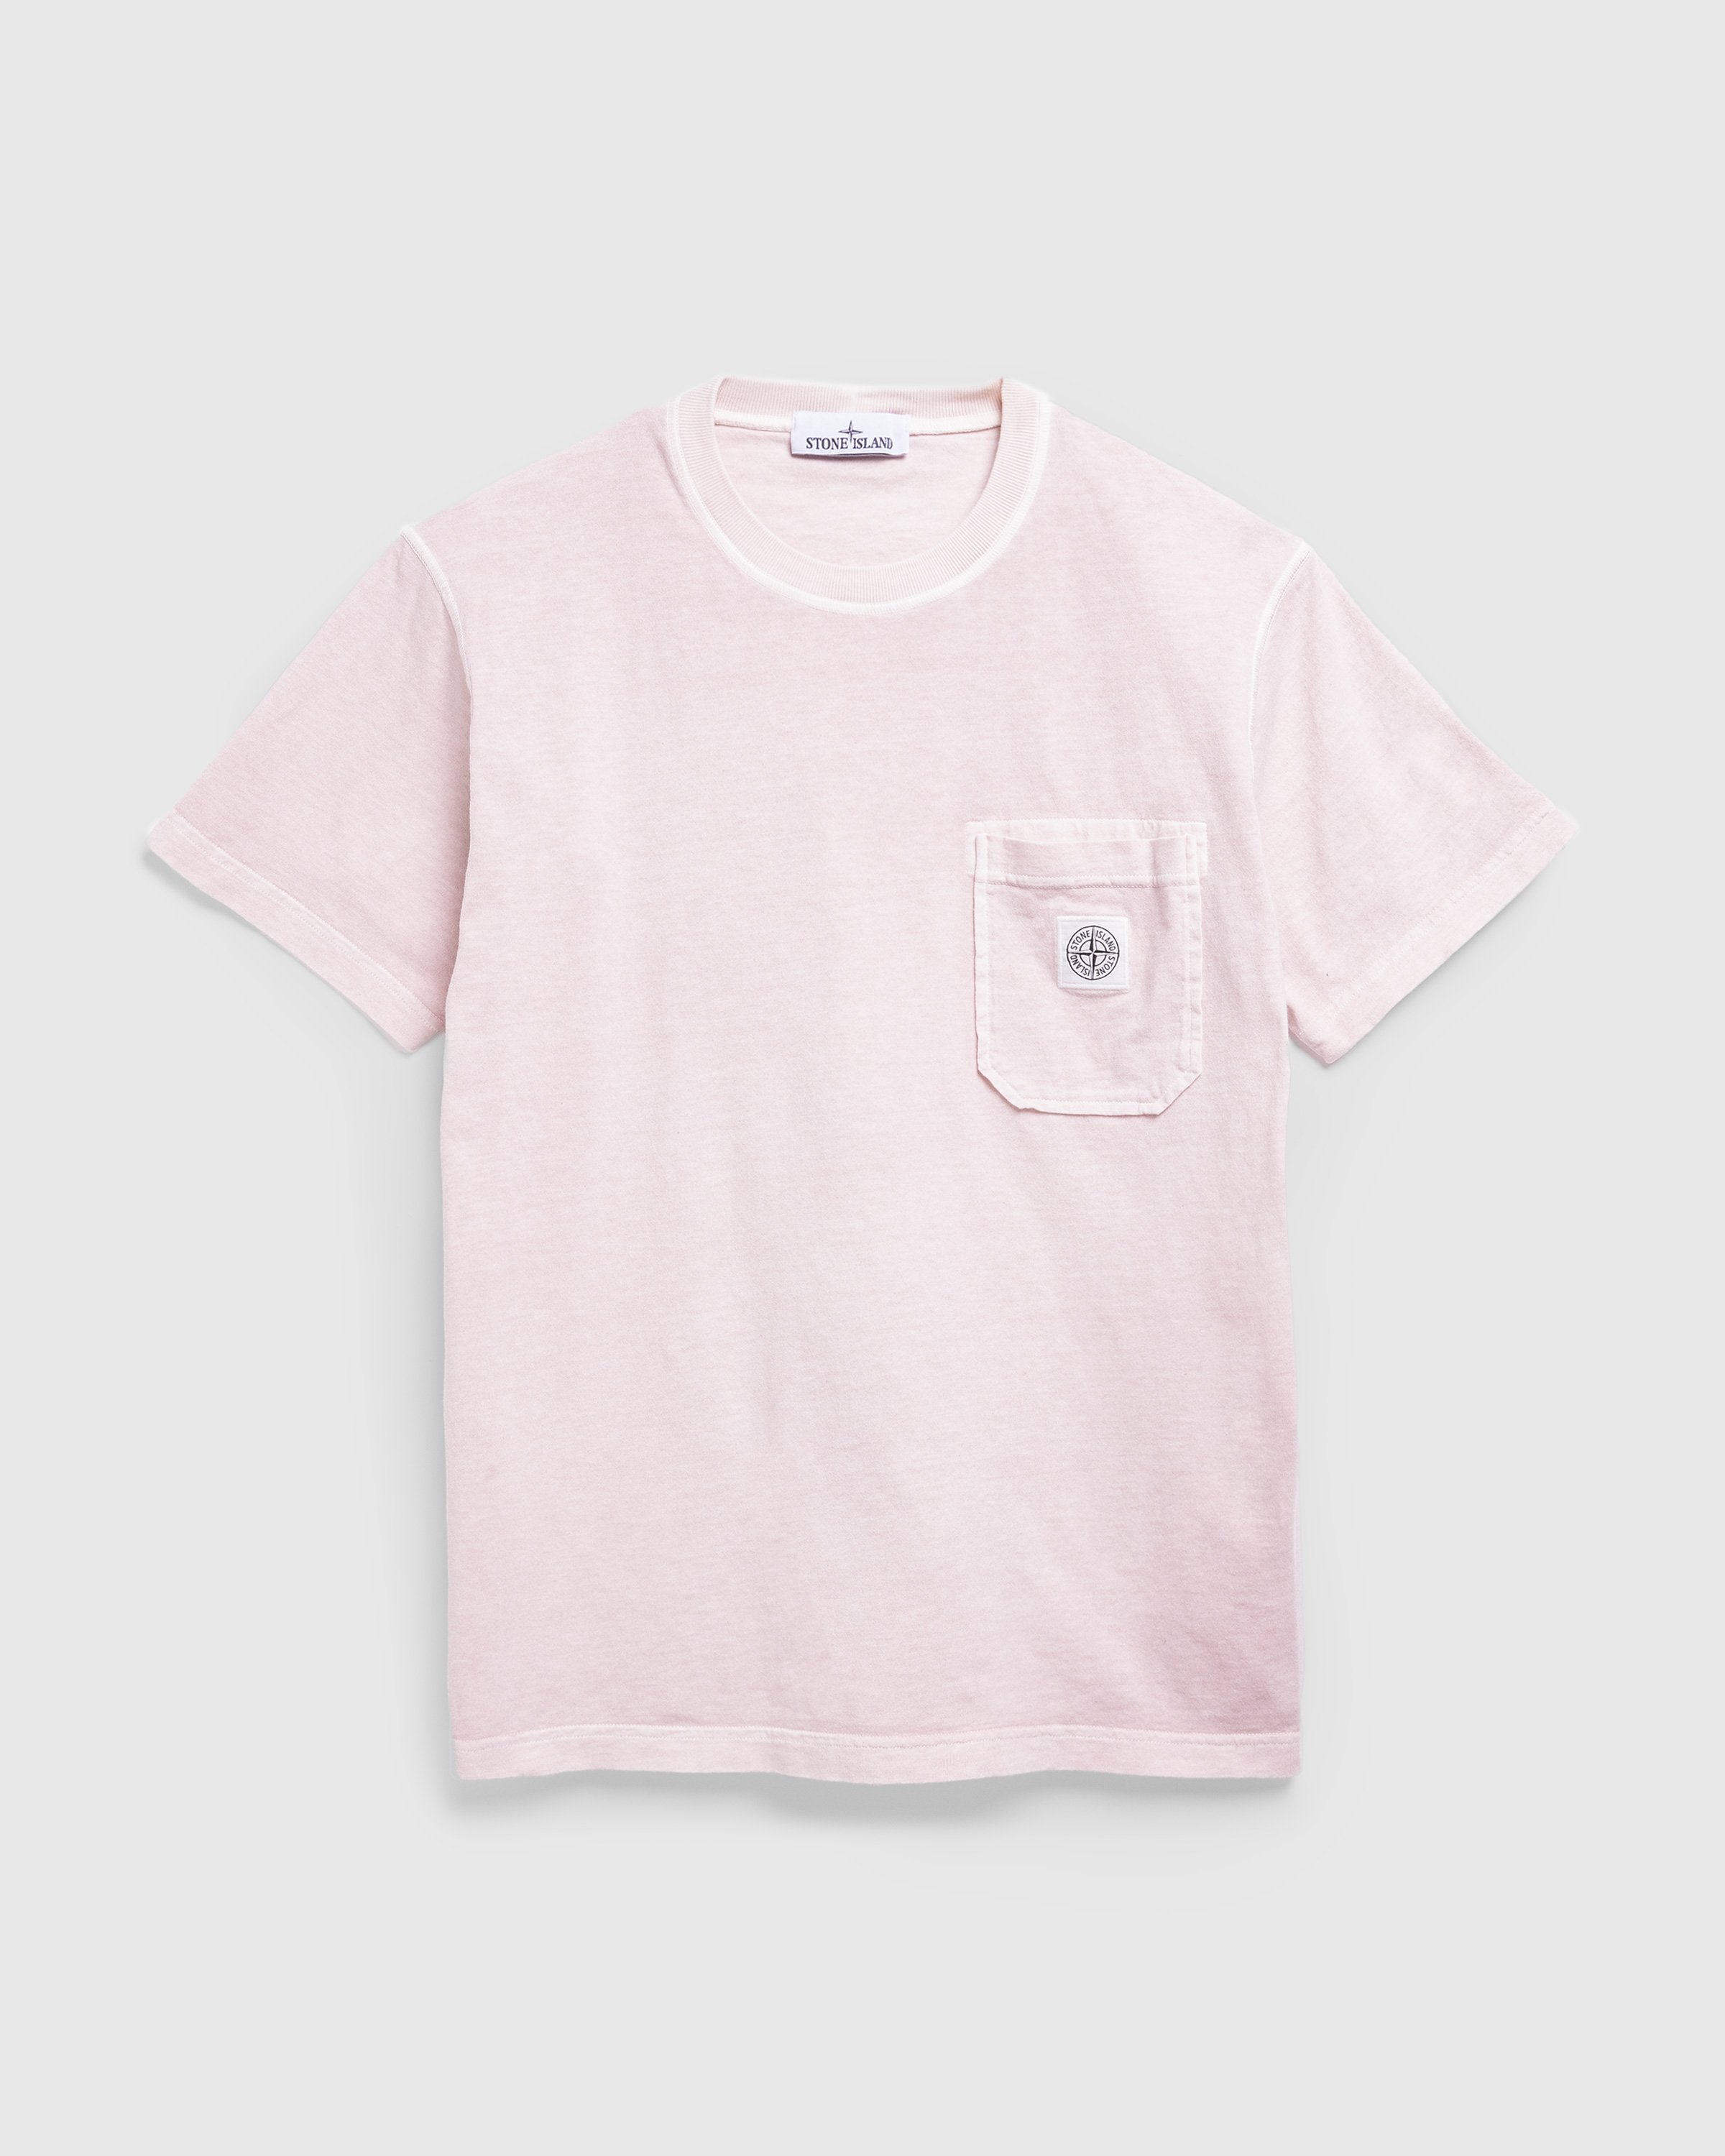 Stone Island - T SHIRT PINK - Clothing - Pink - Image 1